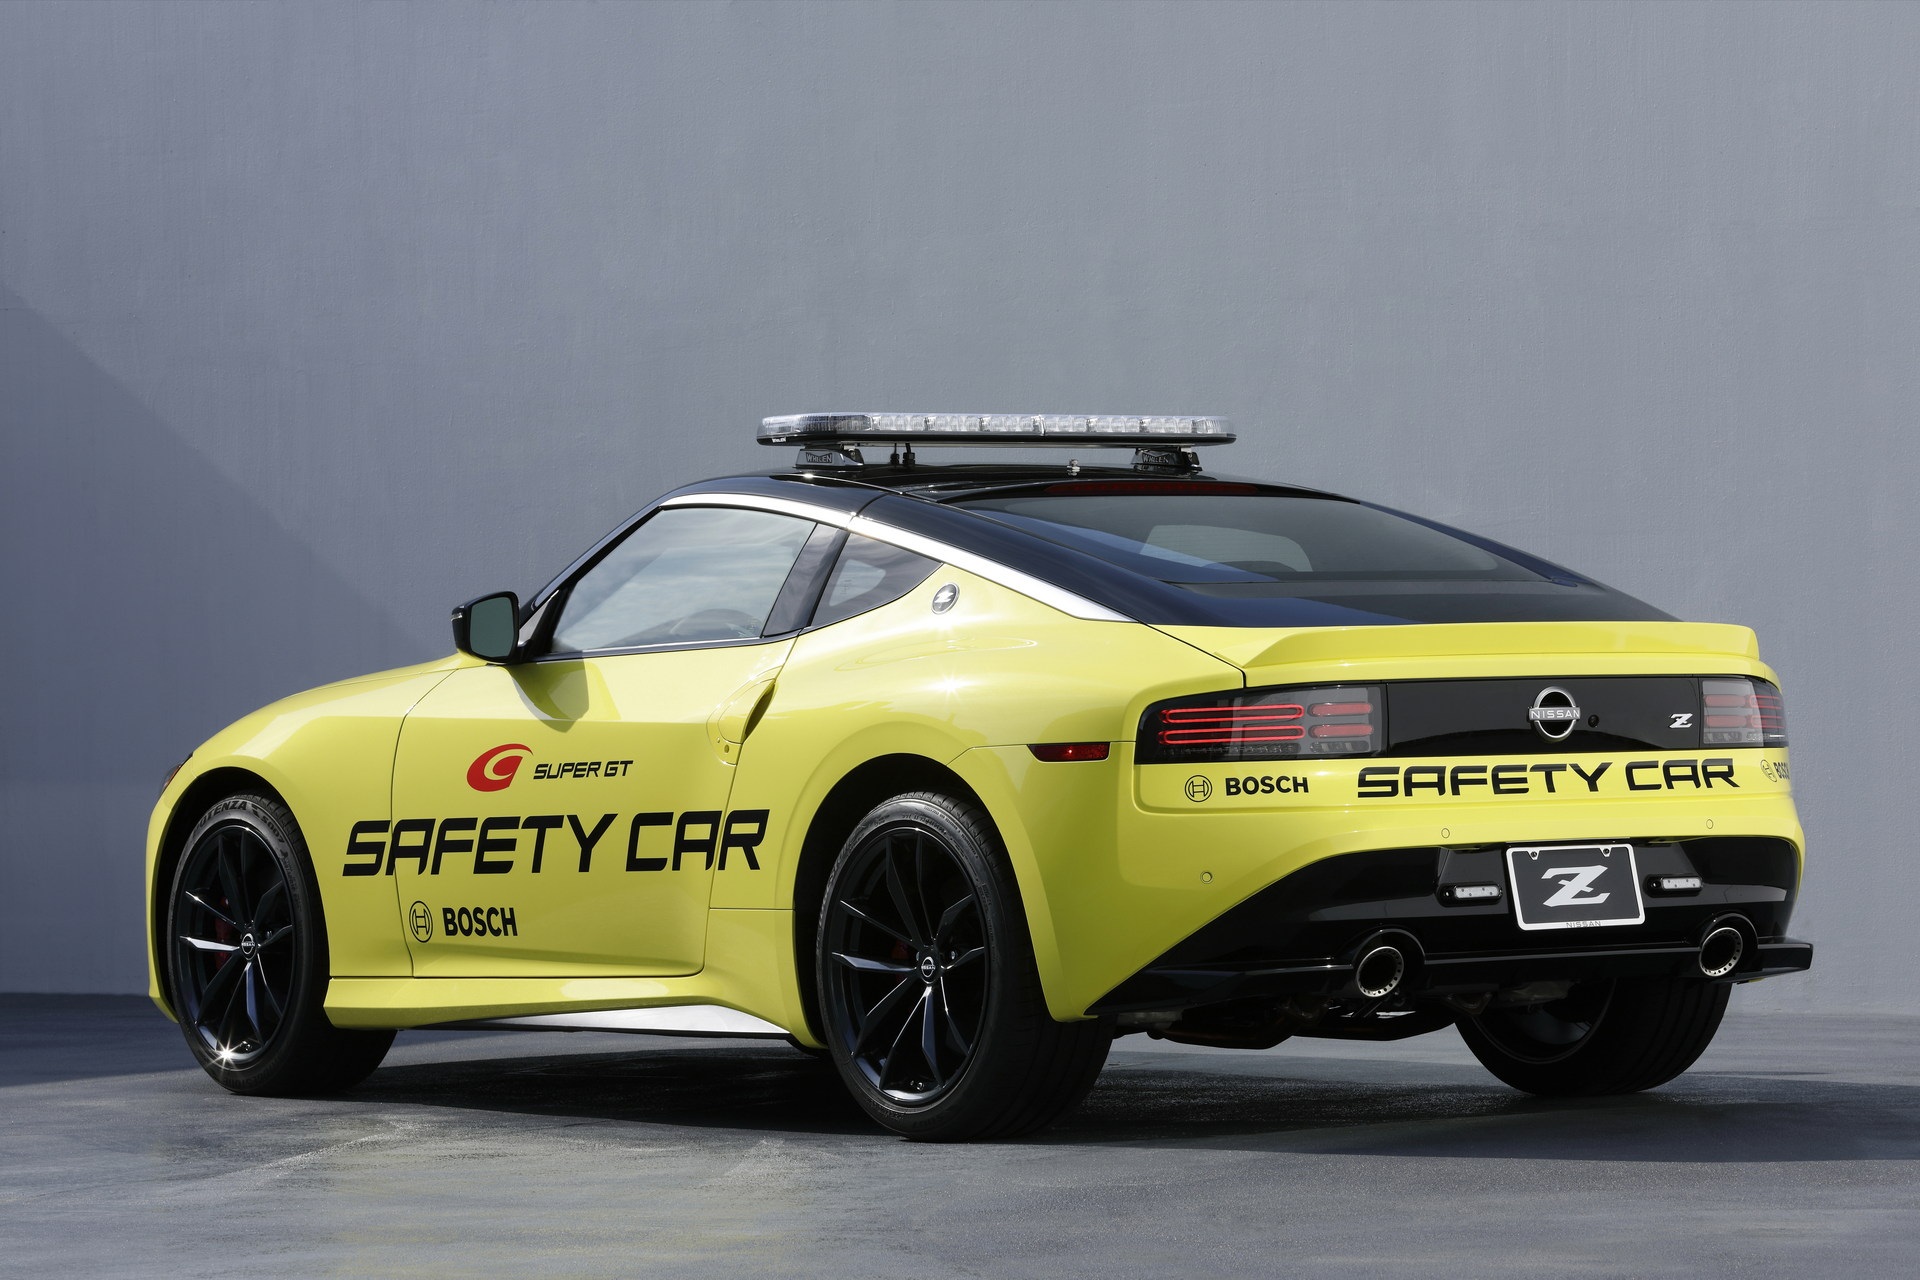 Nissan-Z-Safety-Car-Super-GT-Series-3.jpg